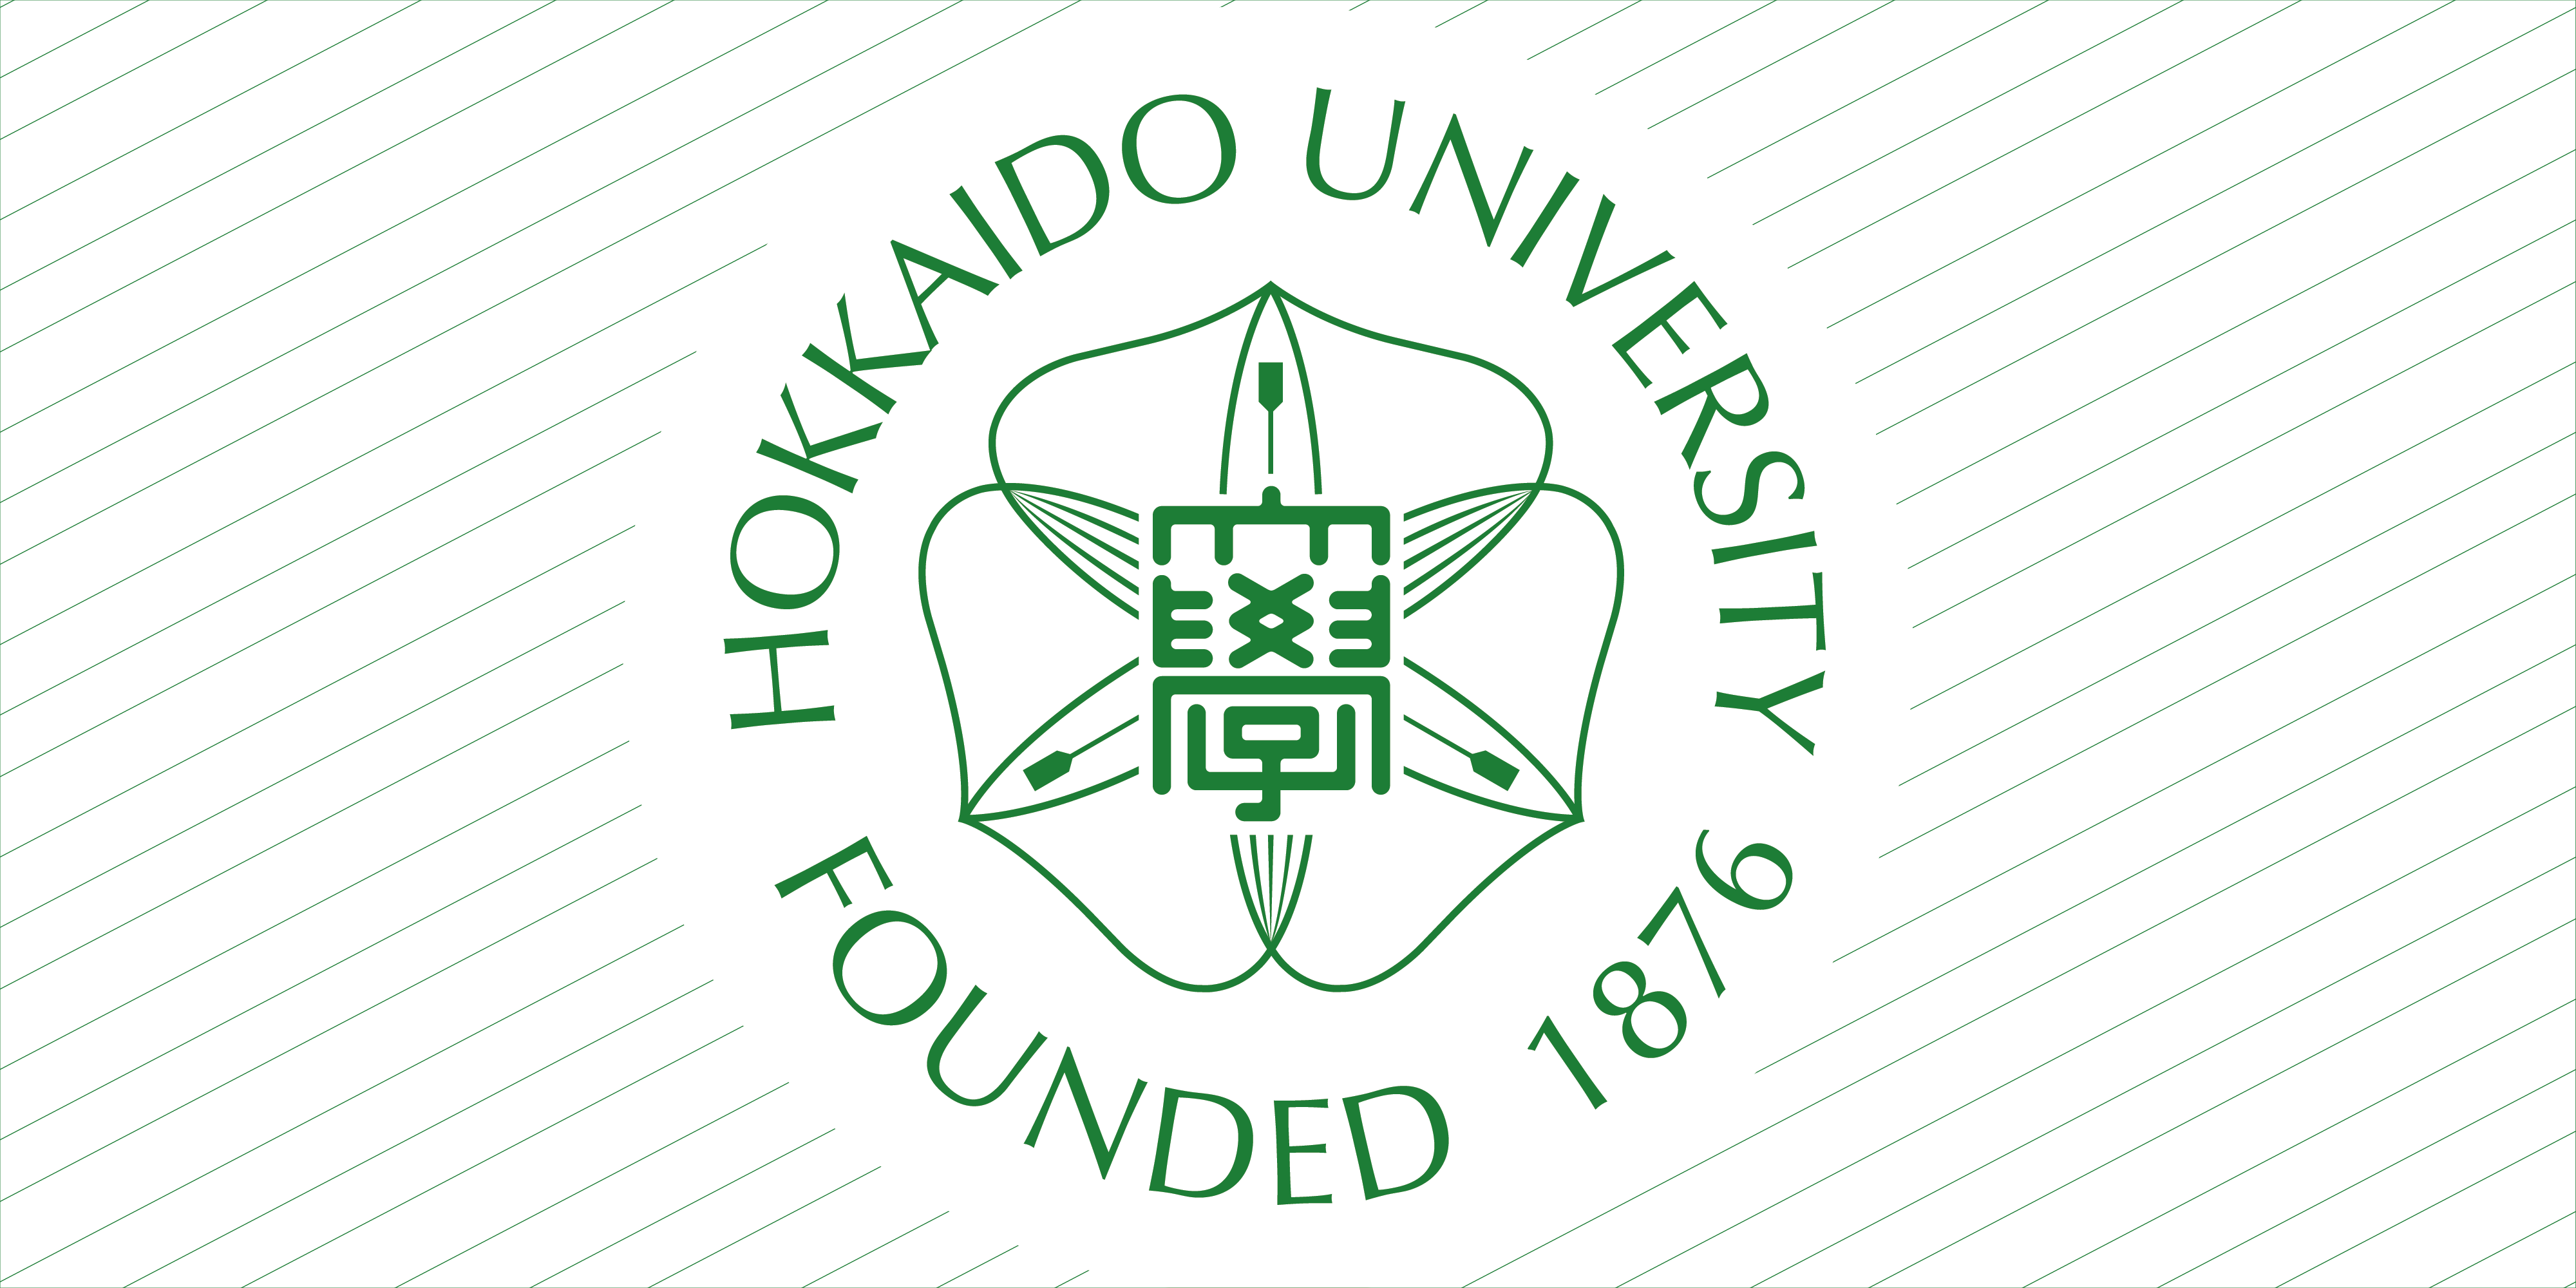 Hokkaido University Global Vision 2040